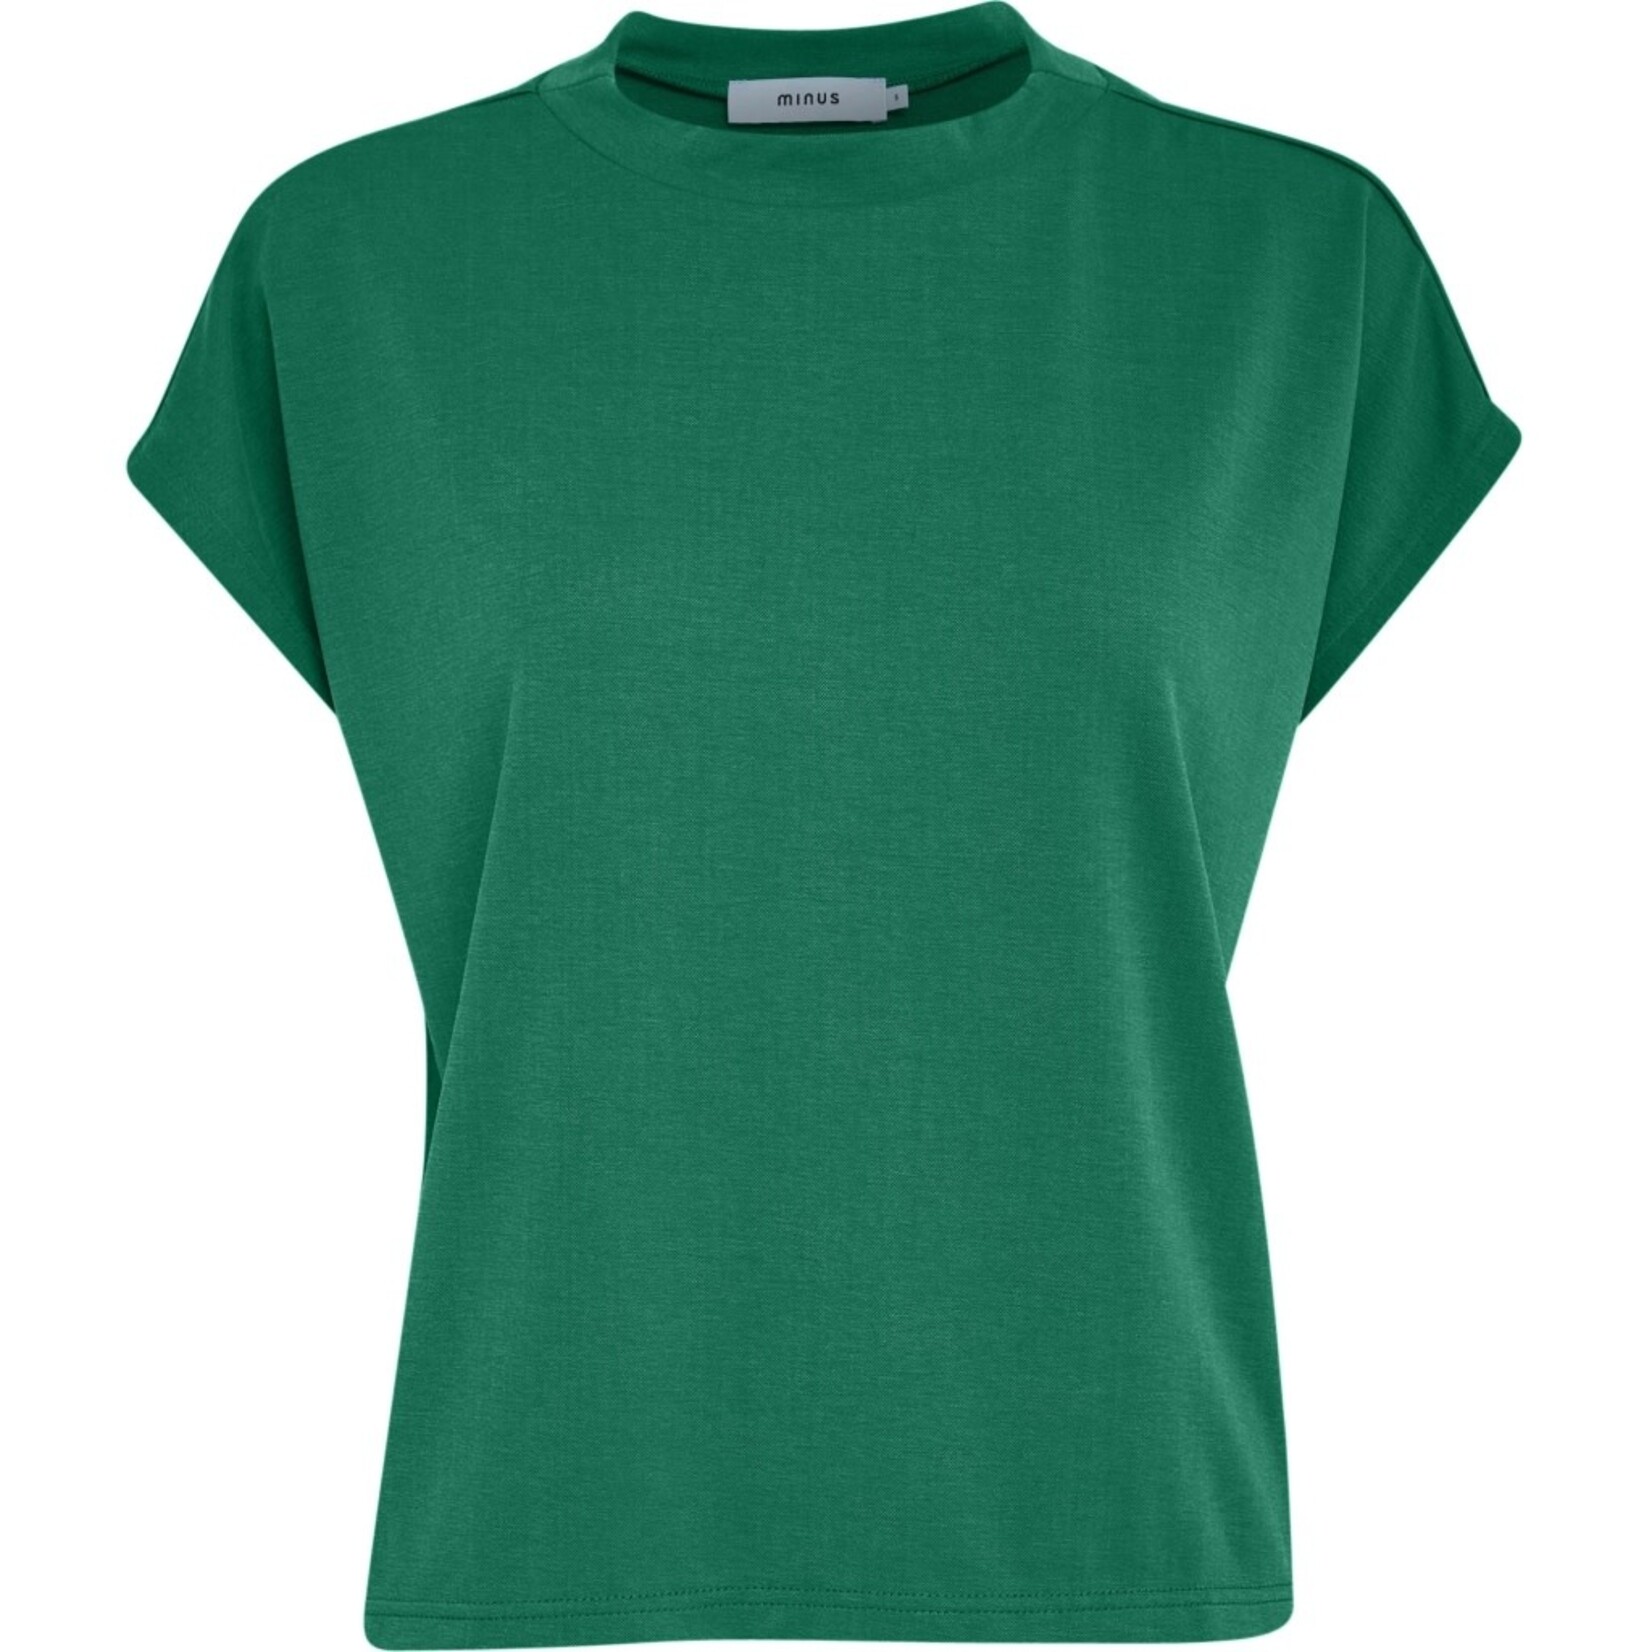 Minus Frikka cap sleeve t-shirt Golf green